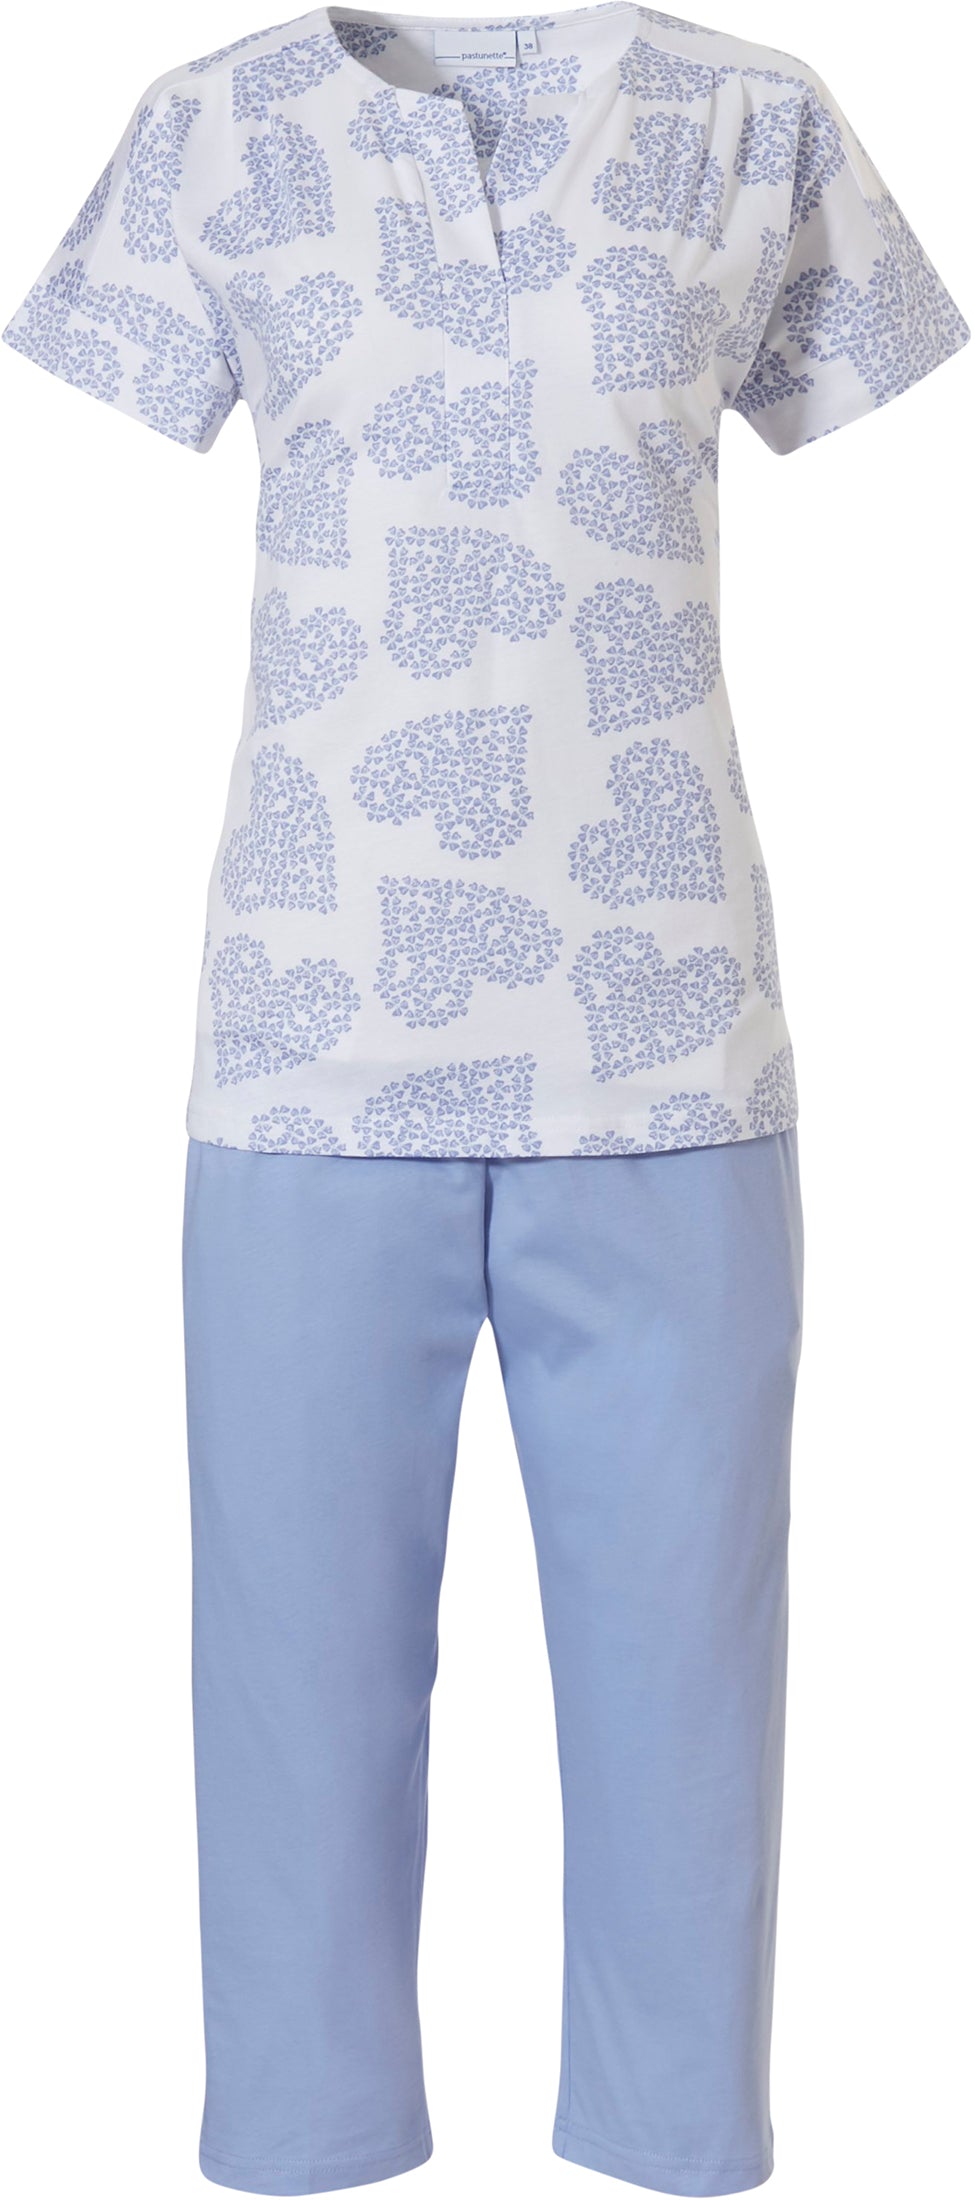 Pyjama with capri 20221-110-2 509 light blue